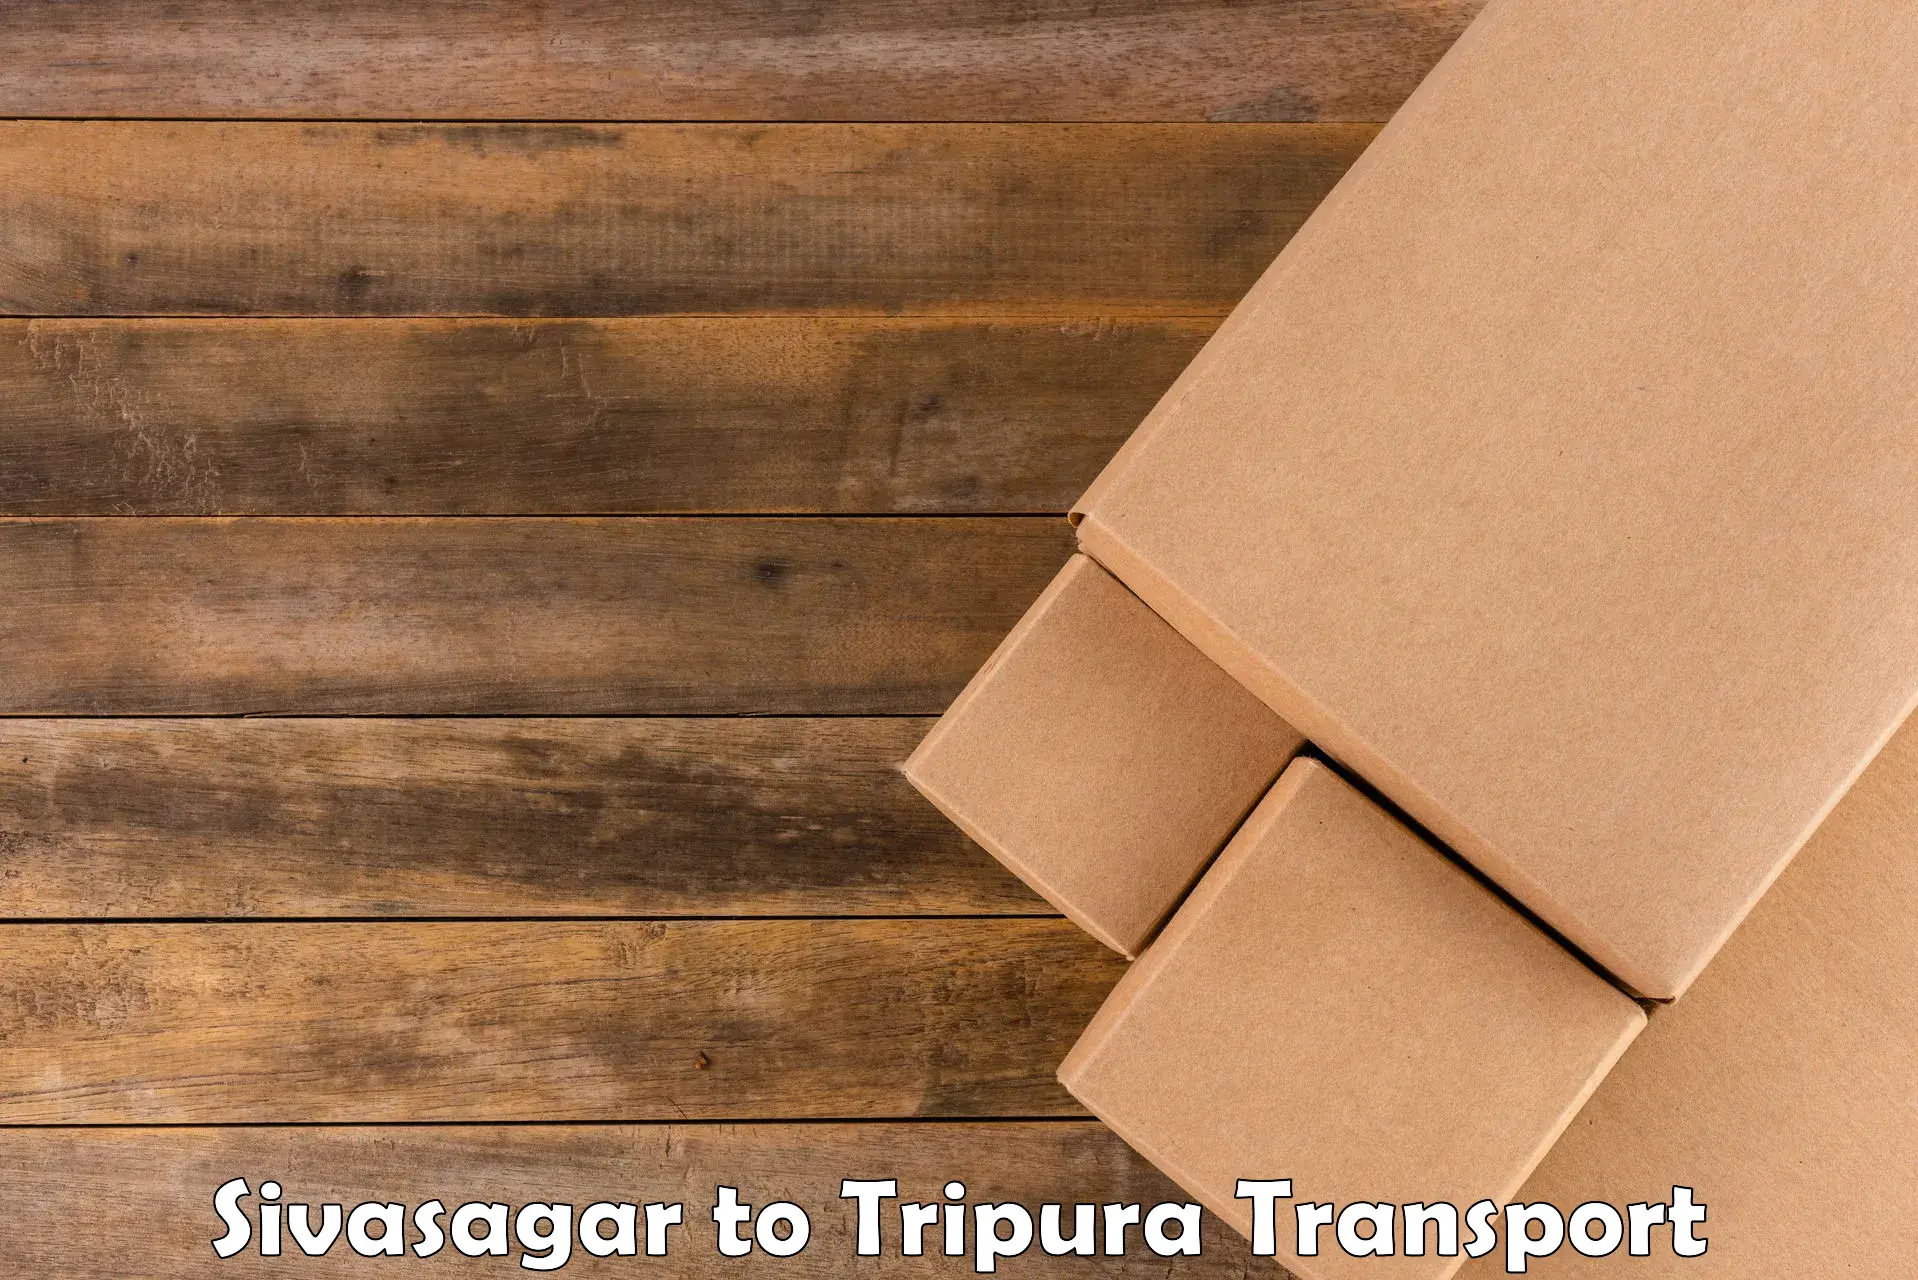 Pick up transport service in Sivasagar to North Tripura